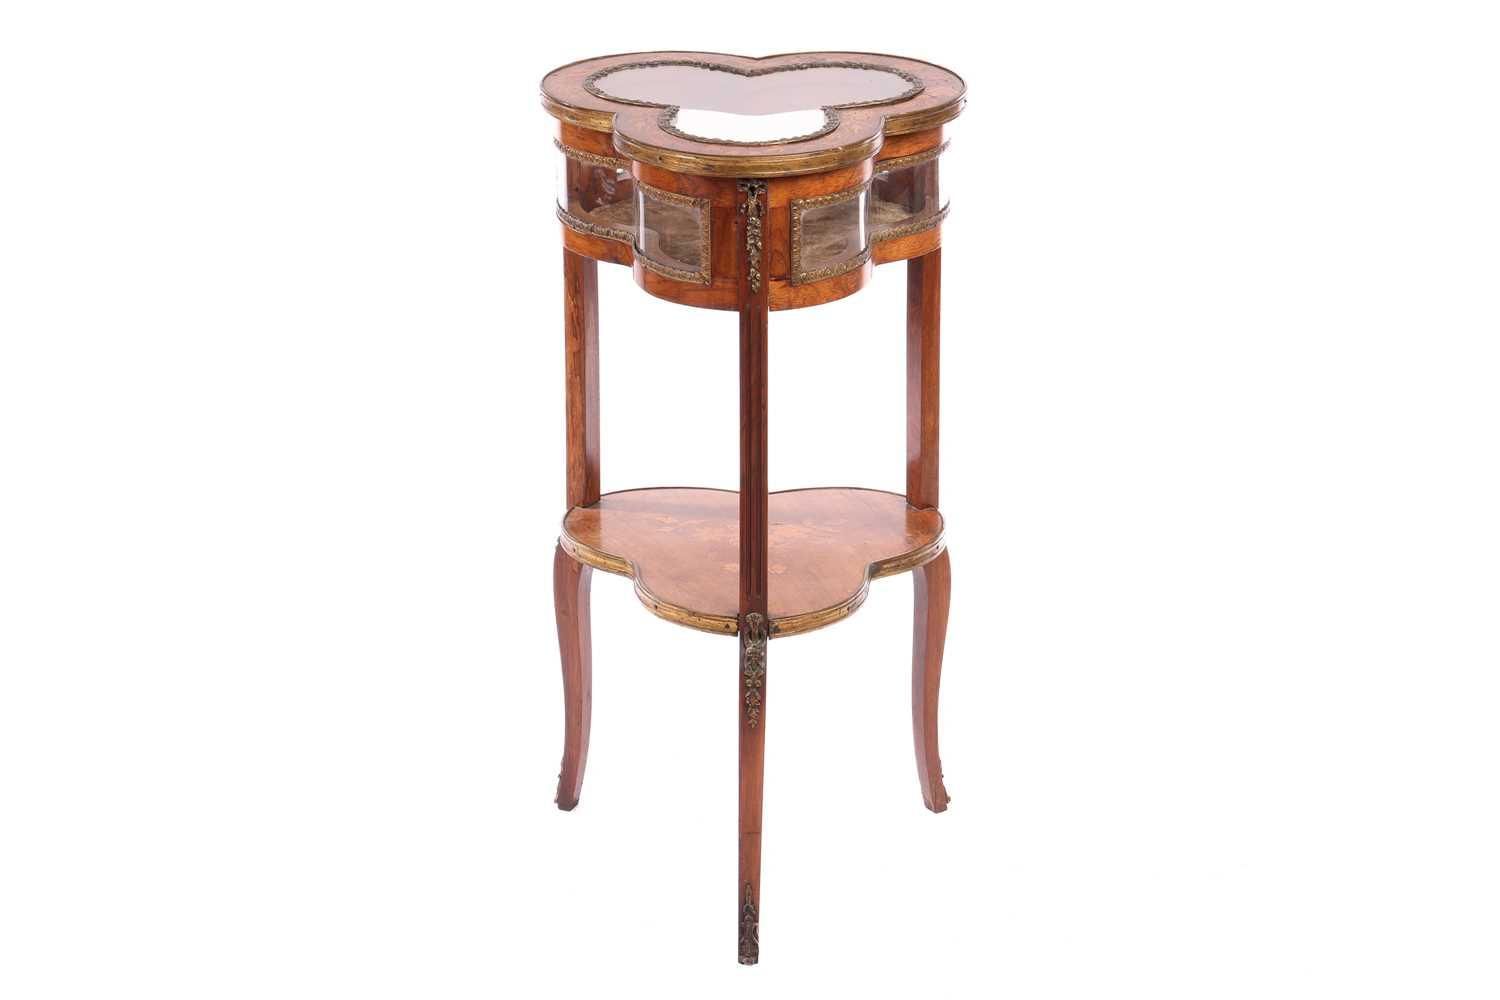 Null 拿破仑三世胡桃木镶嵌 "俱乐部 "形装饰桌，通体镶嵌鎏金金属，由连接下层的异形桌腿支撑，宽 42 厘米 x 高 94 厘米。